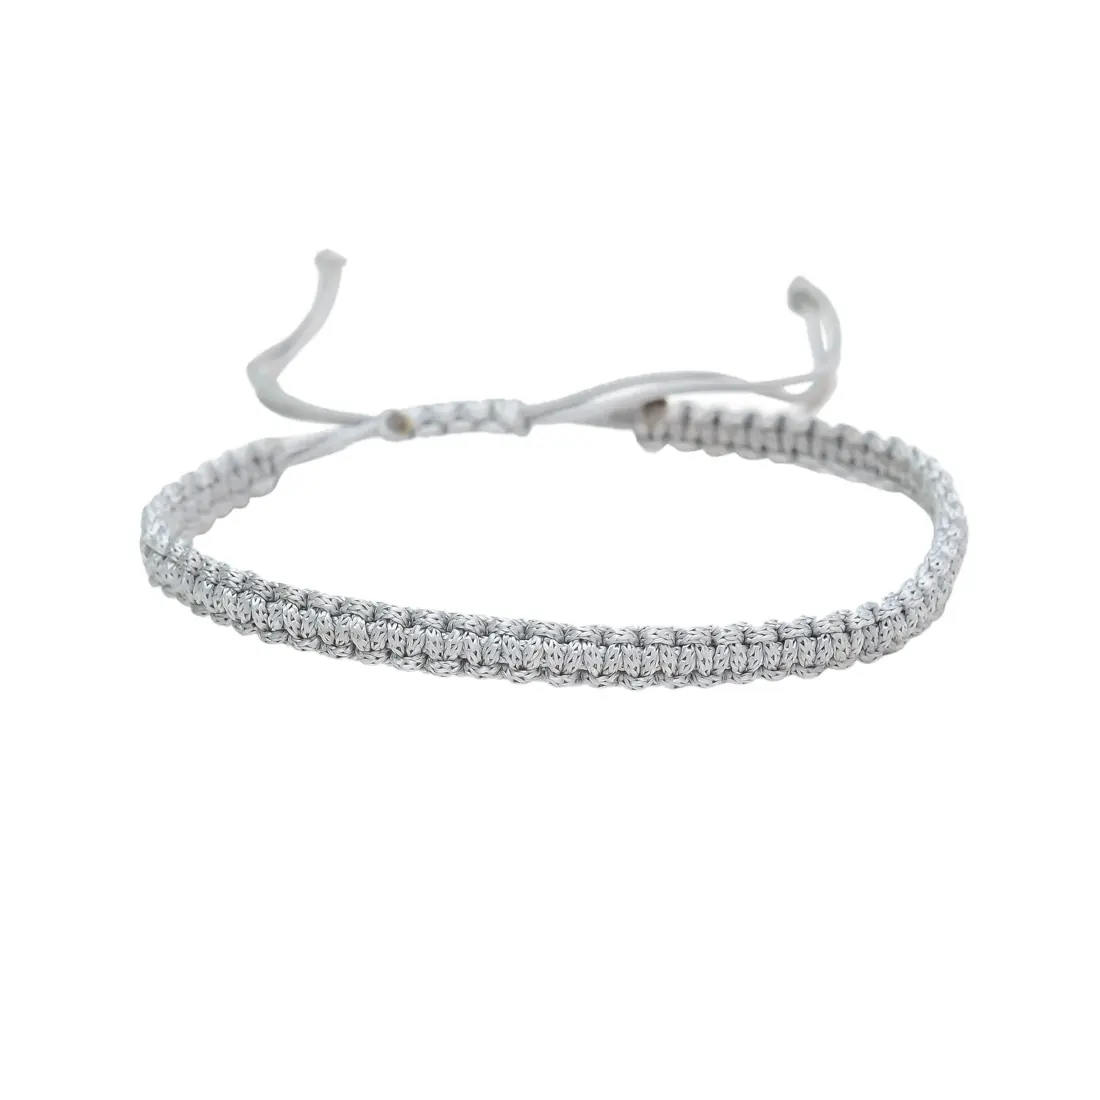 Handmade Silver Grey String Bracelet Lucky Protection Matching Bracelets for Couple Lover Family Friends Women Men